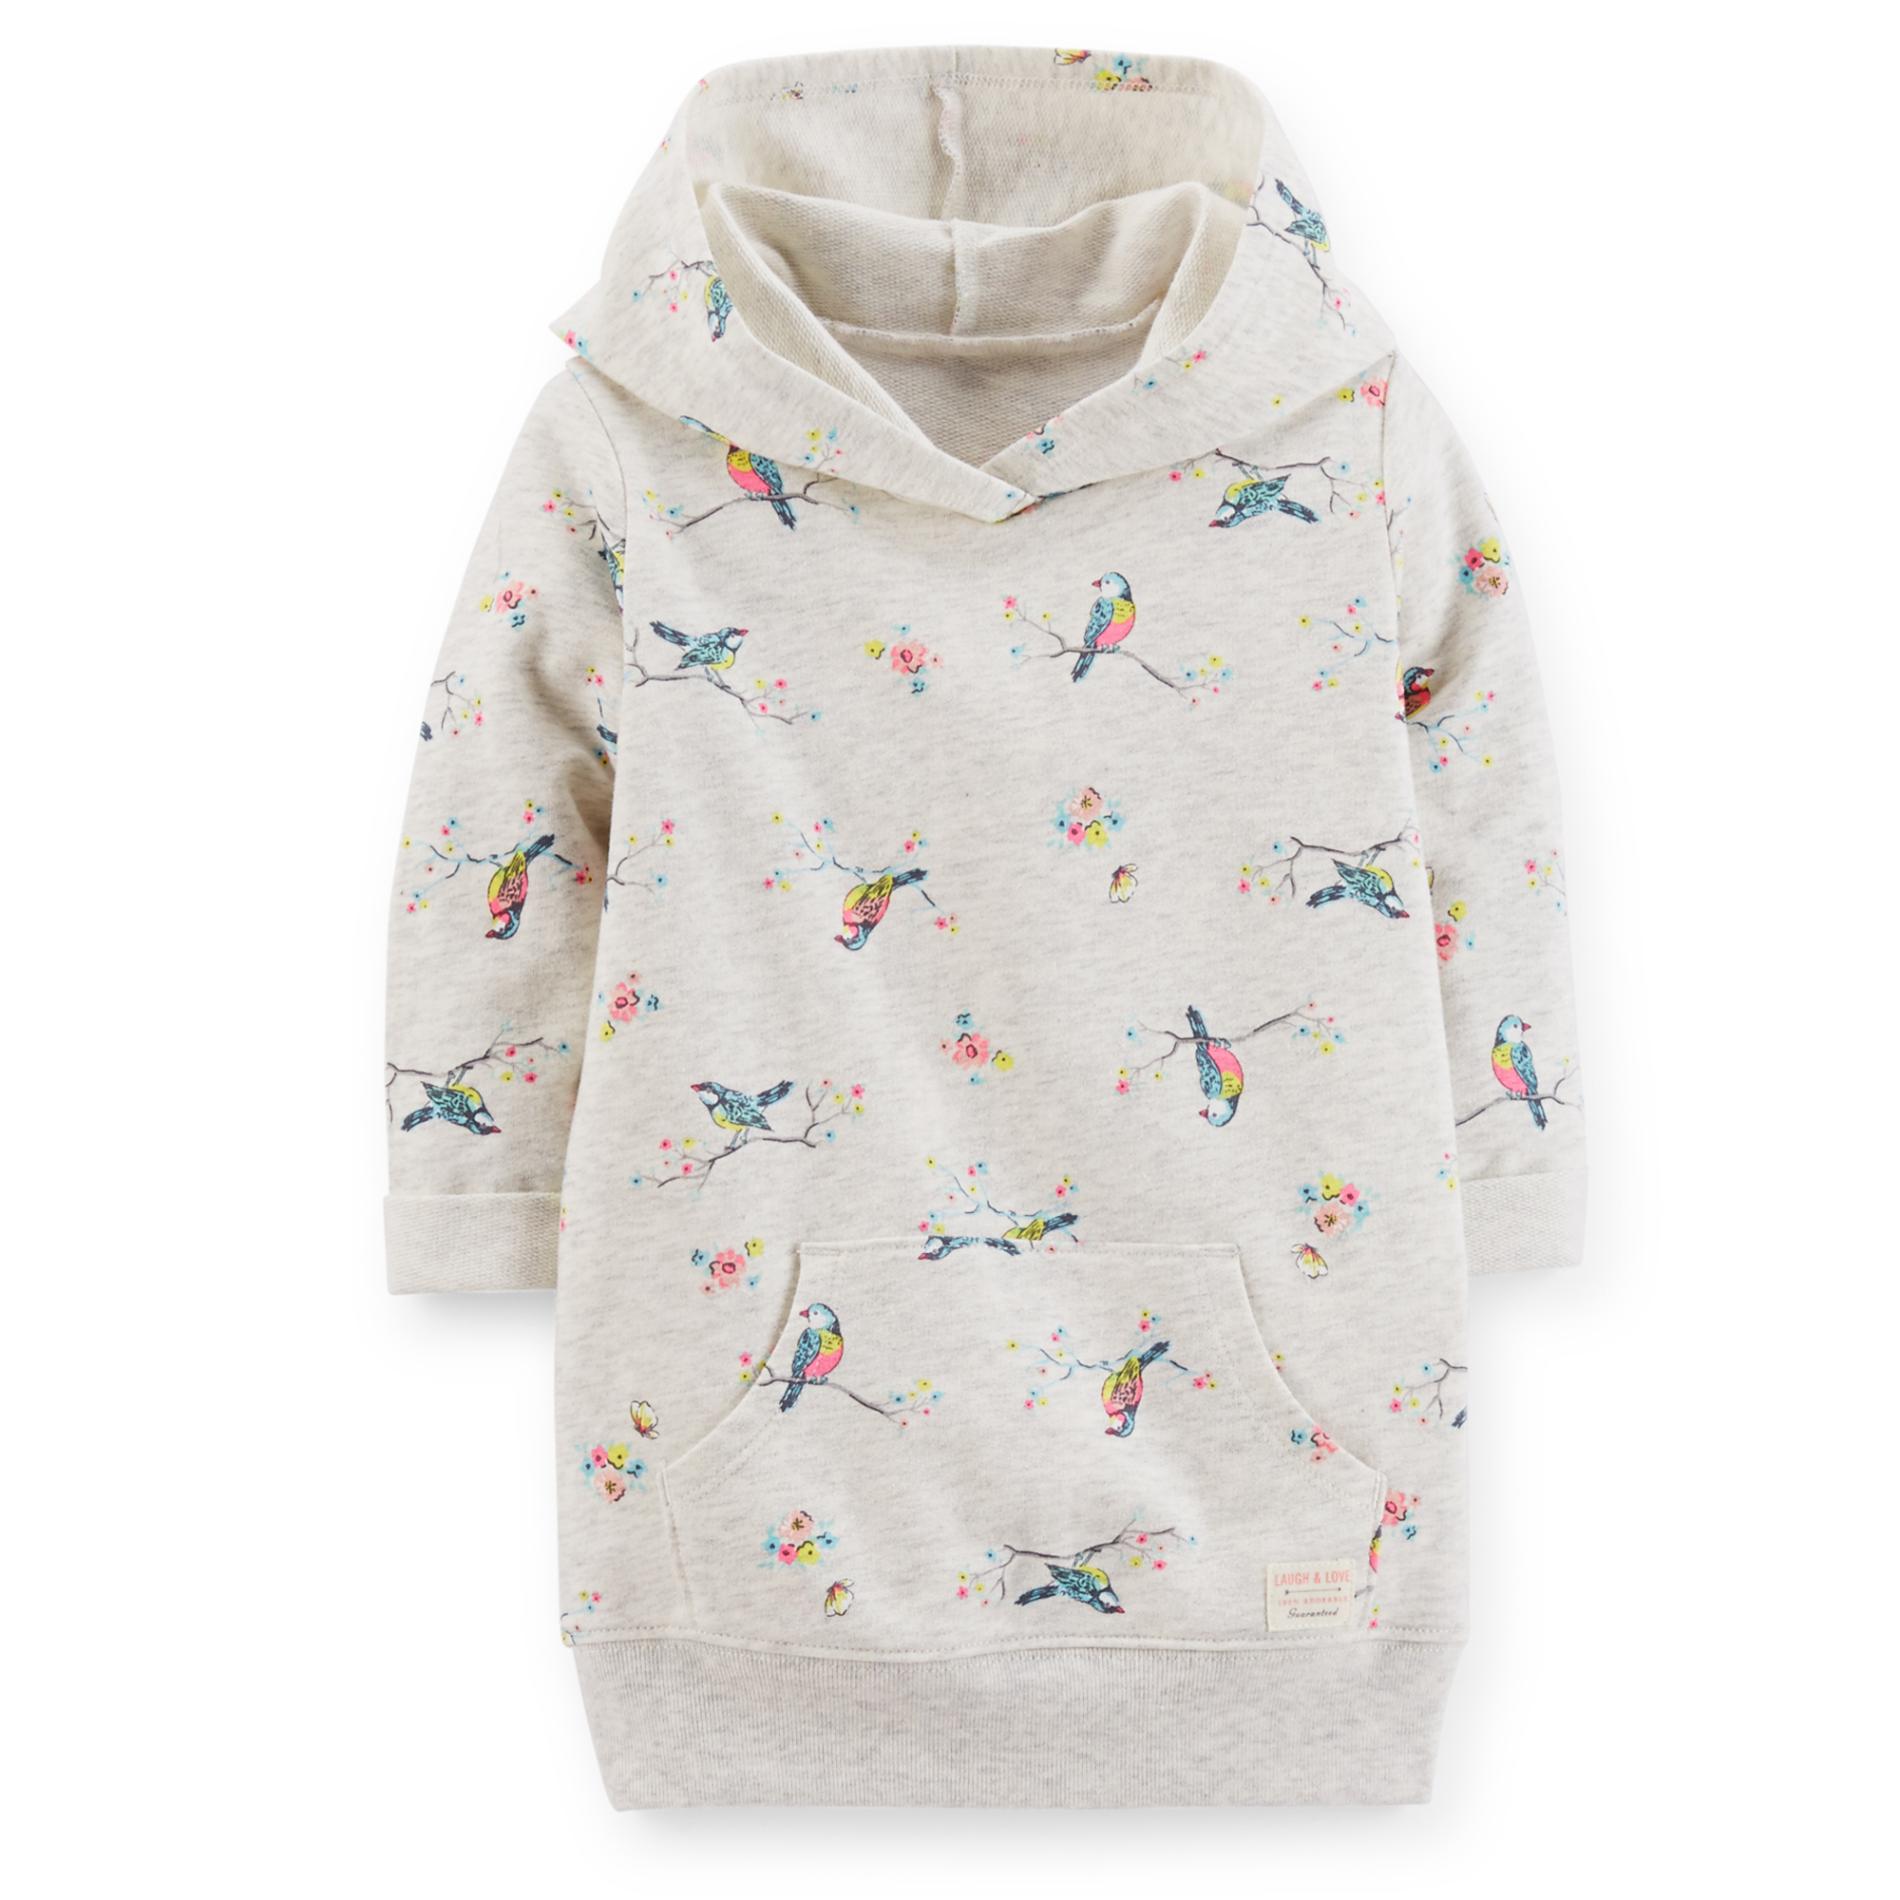 Carter's Toddler Girl's Hooded Sweatshirt - Birds & Floral